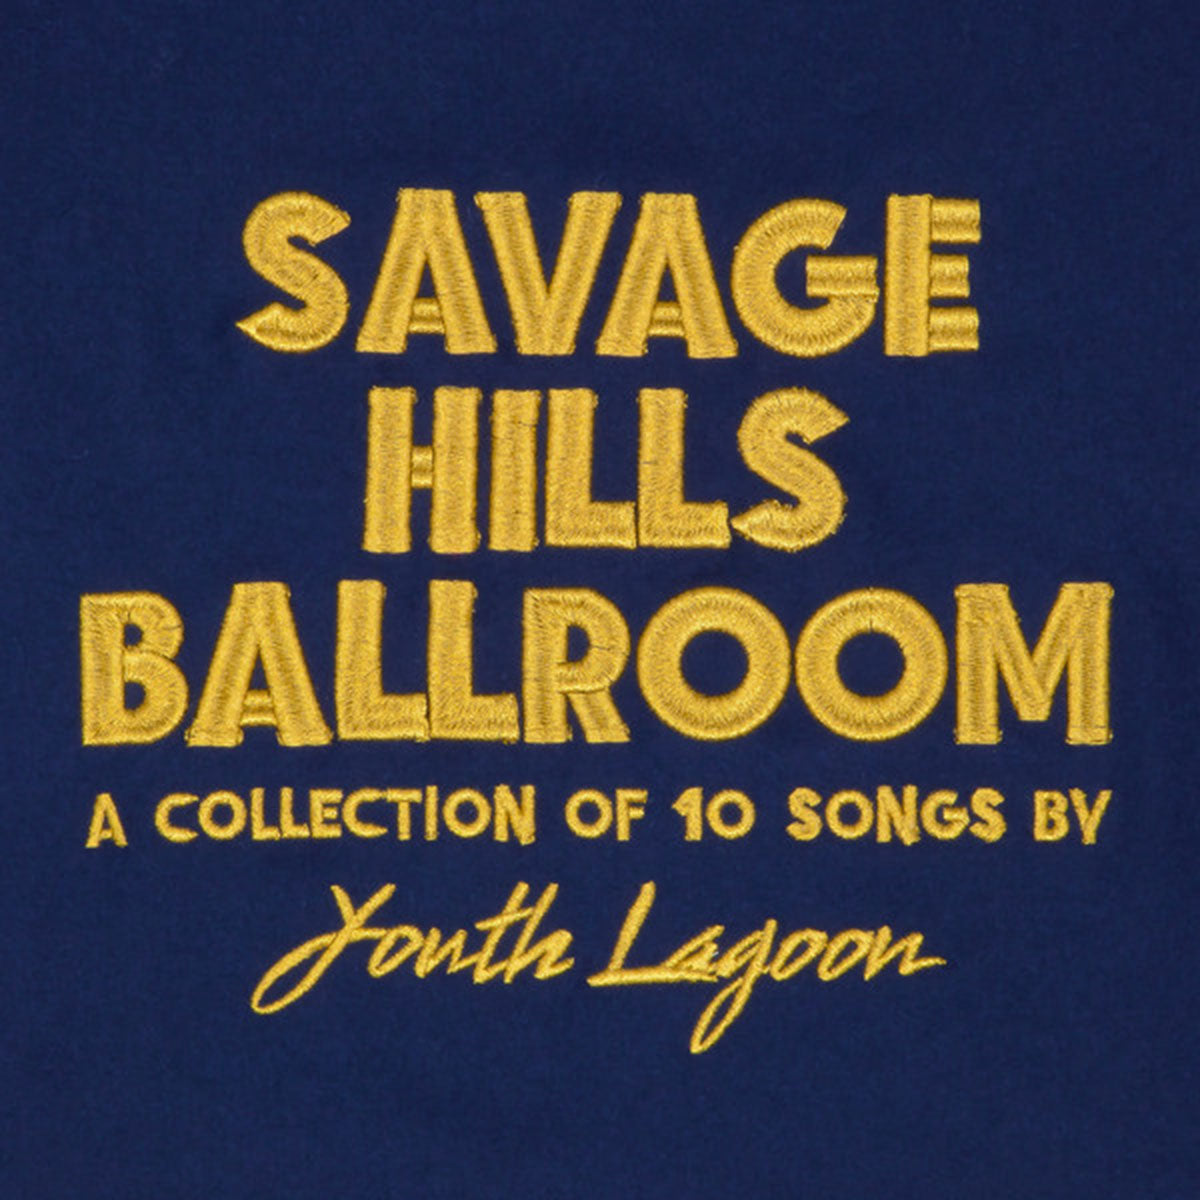 Youth Lagoon – Savage Hills Ballroom - GOLD VINYL